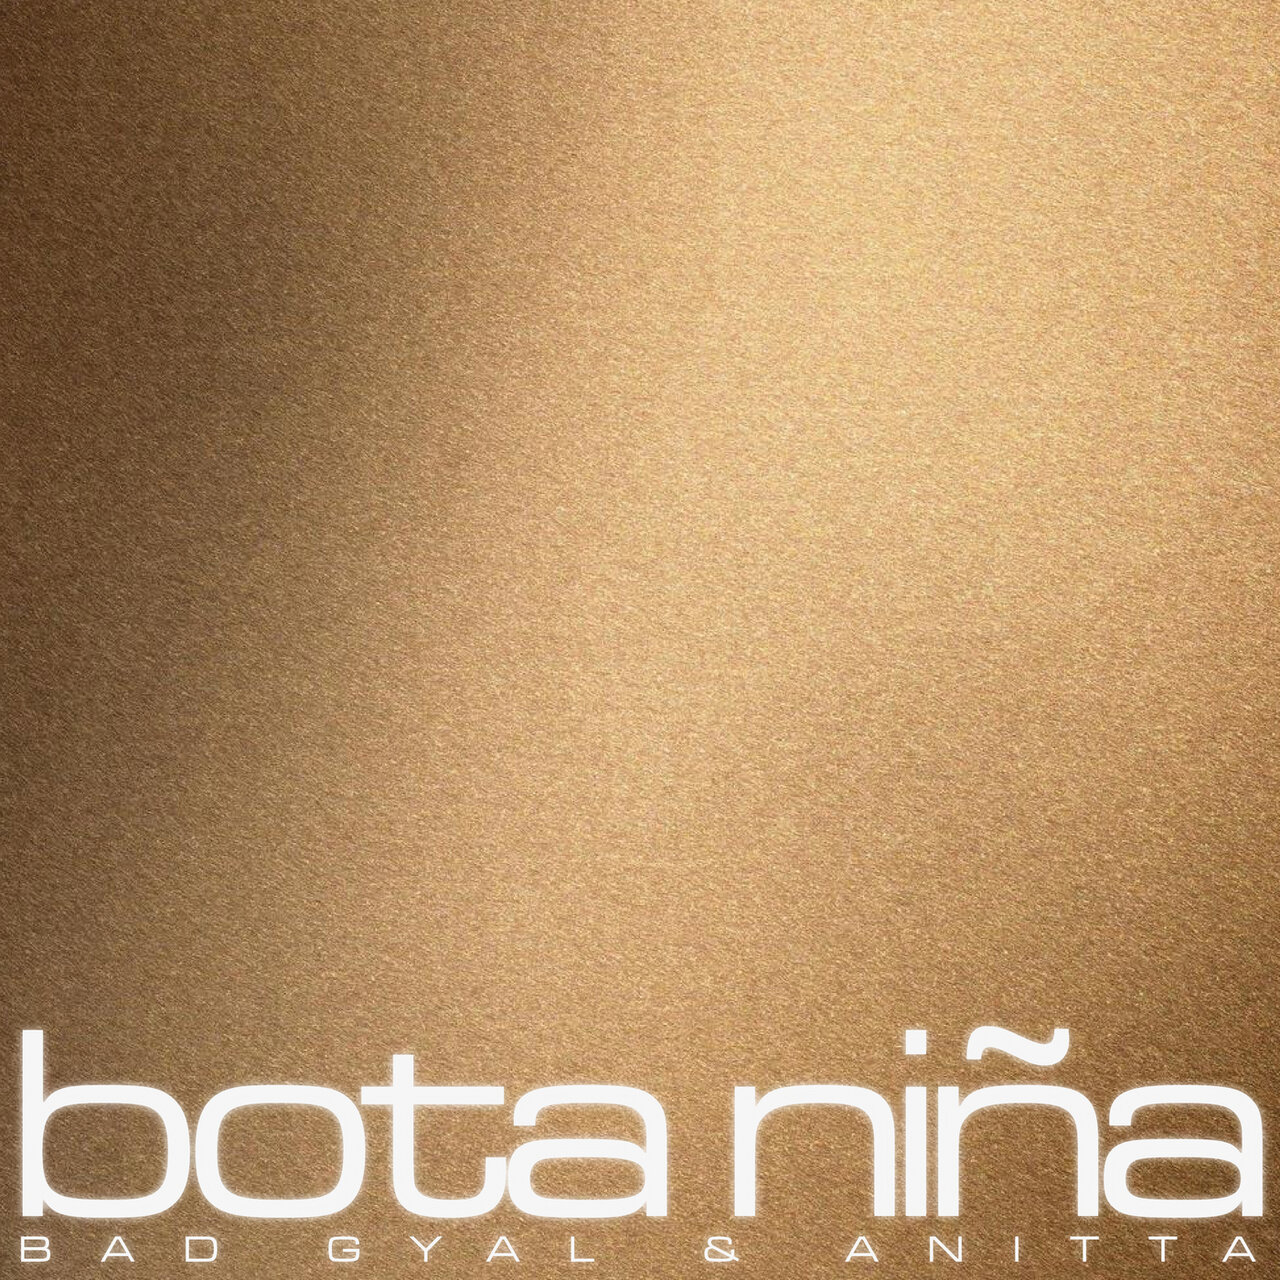 Bad Gyal & Anitta — Bota Niña cover artwork